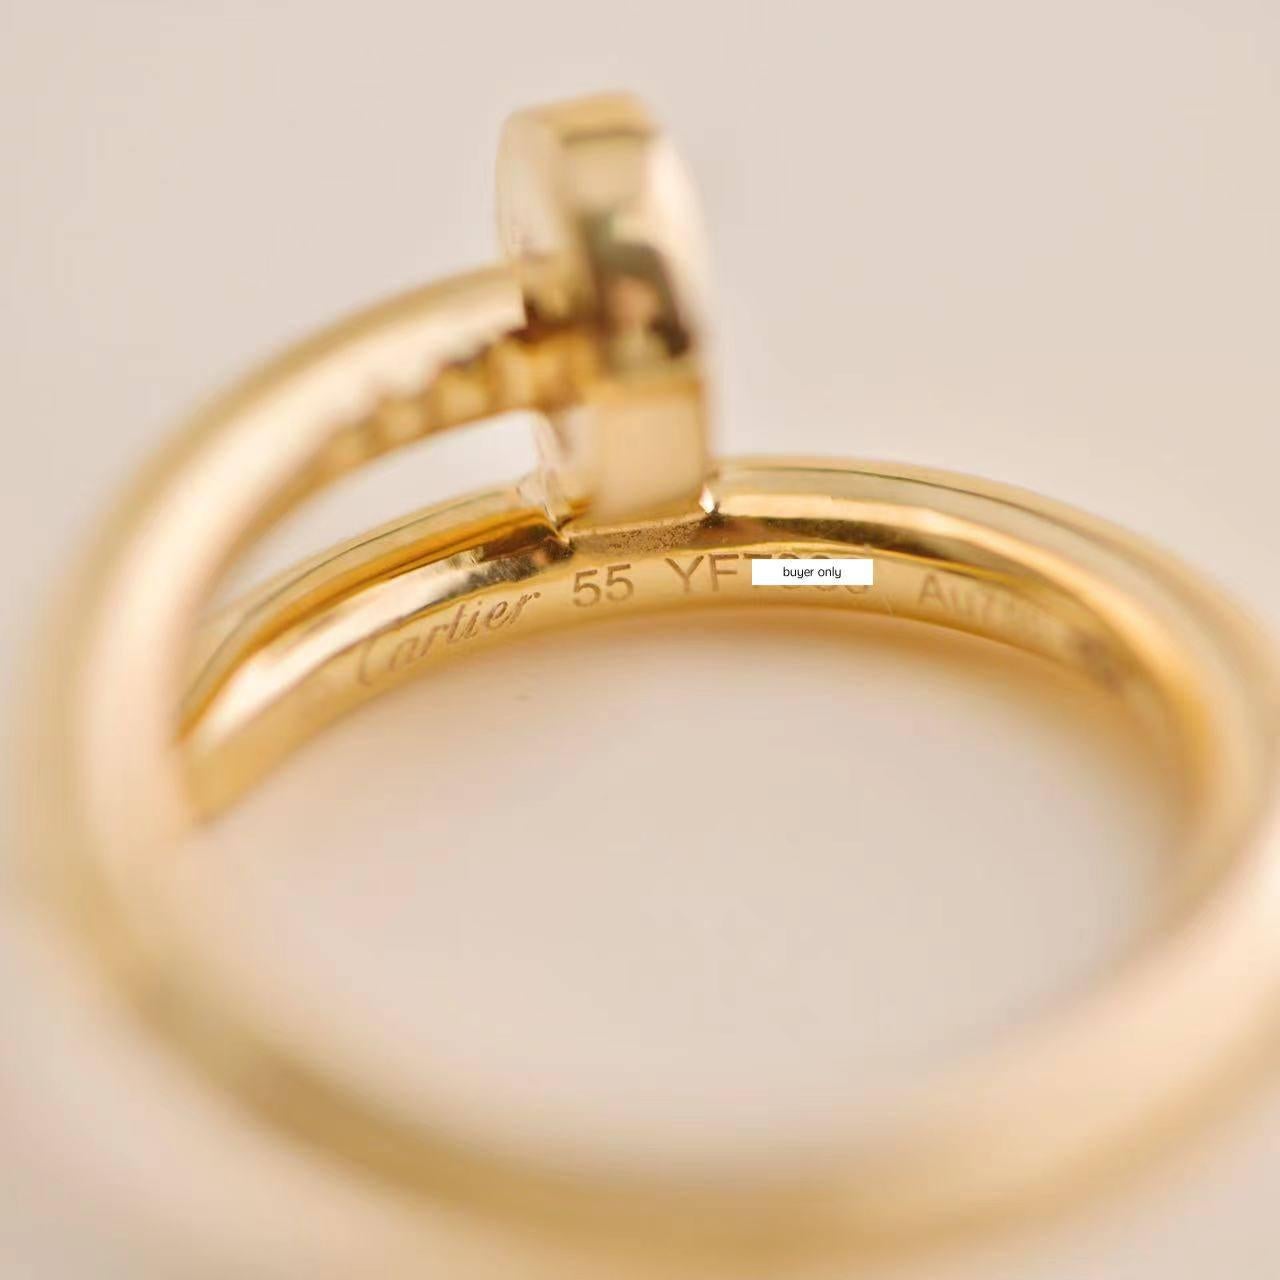 Cartier Juste Un Clou Rose Gold Ring Size 55 For Sale 3